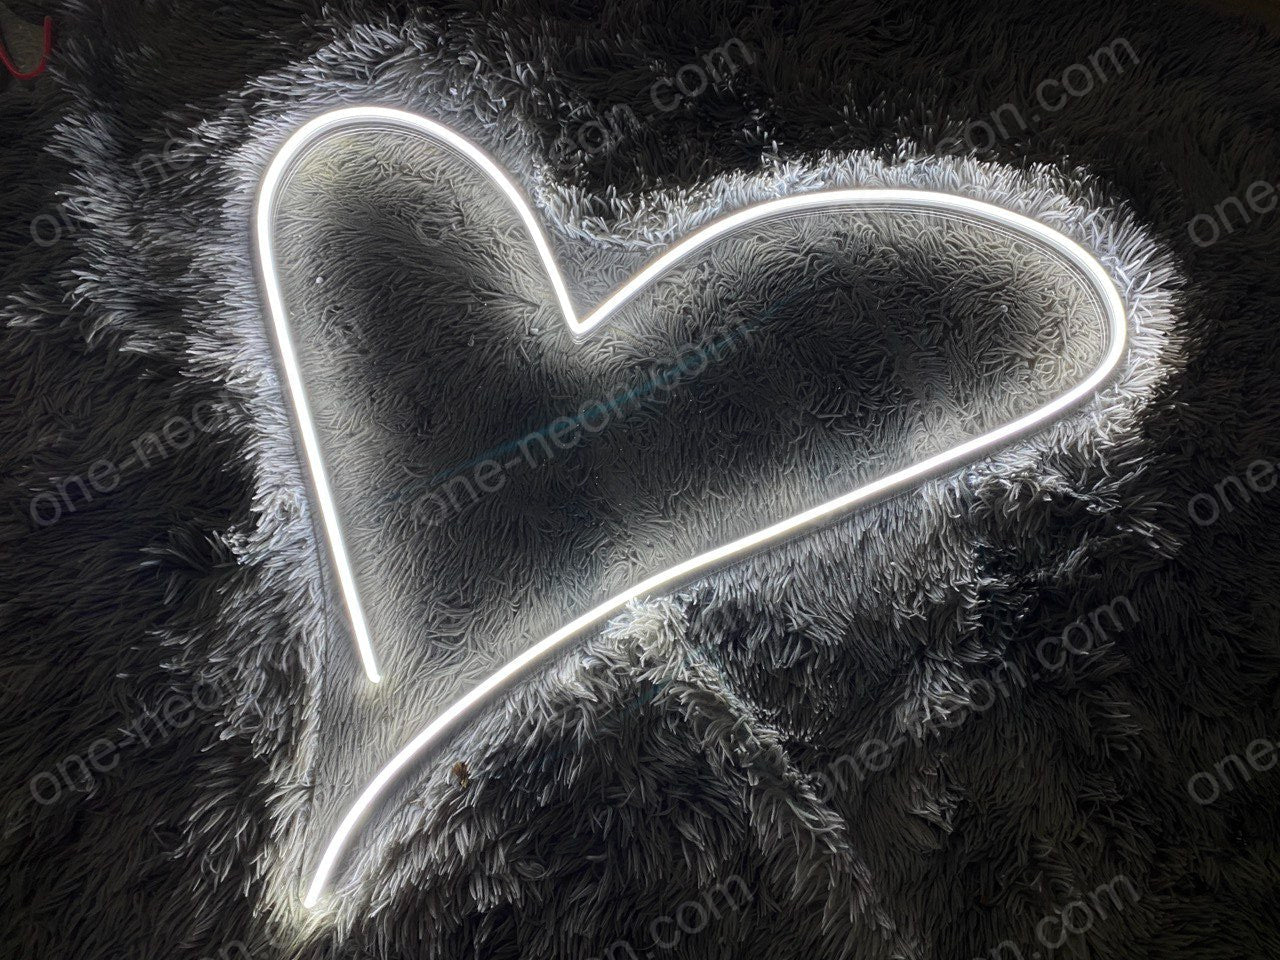 Heart | LED Neon Sign